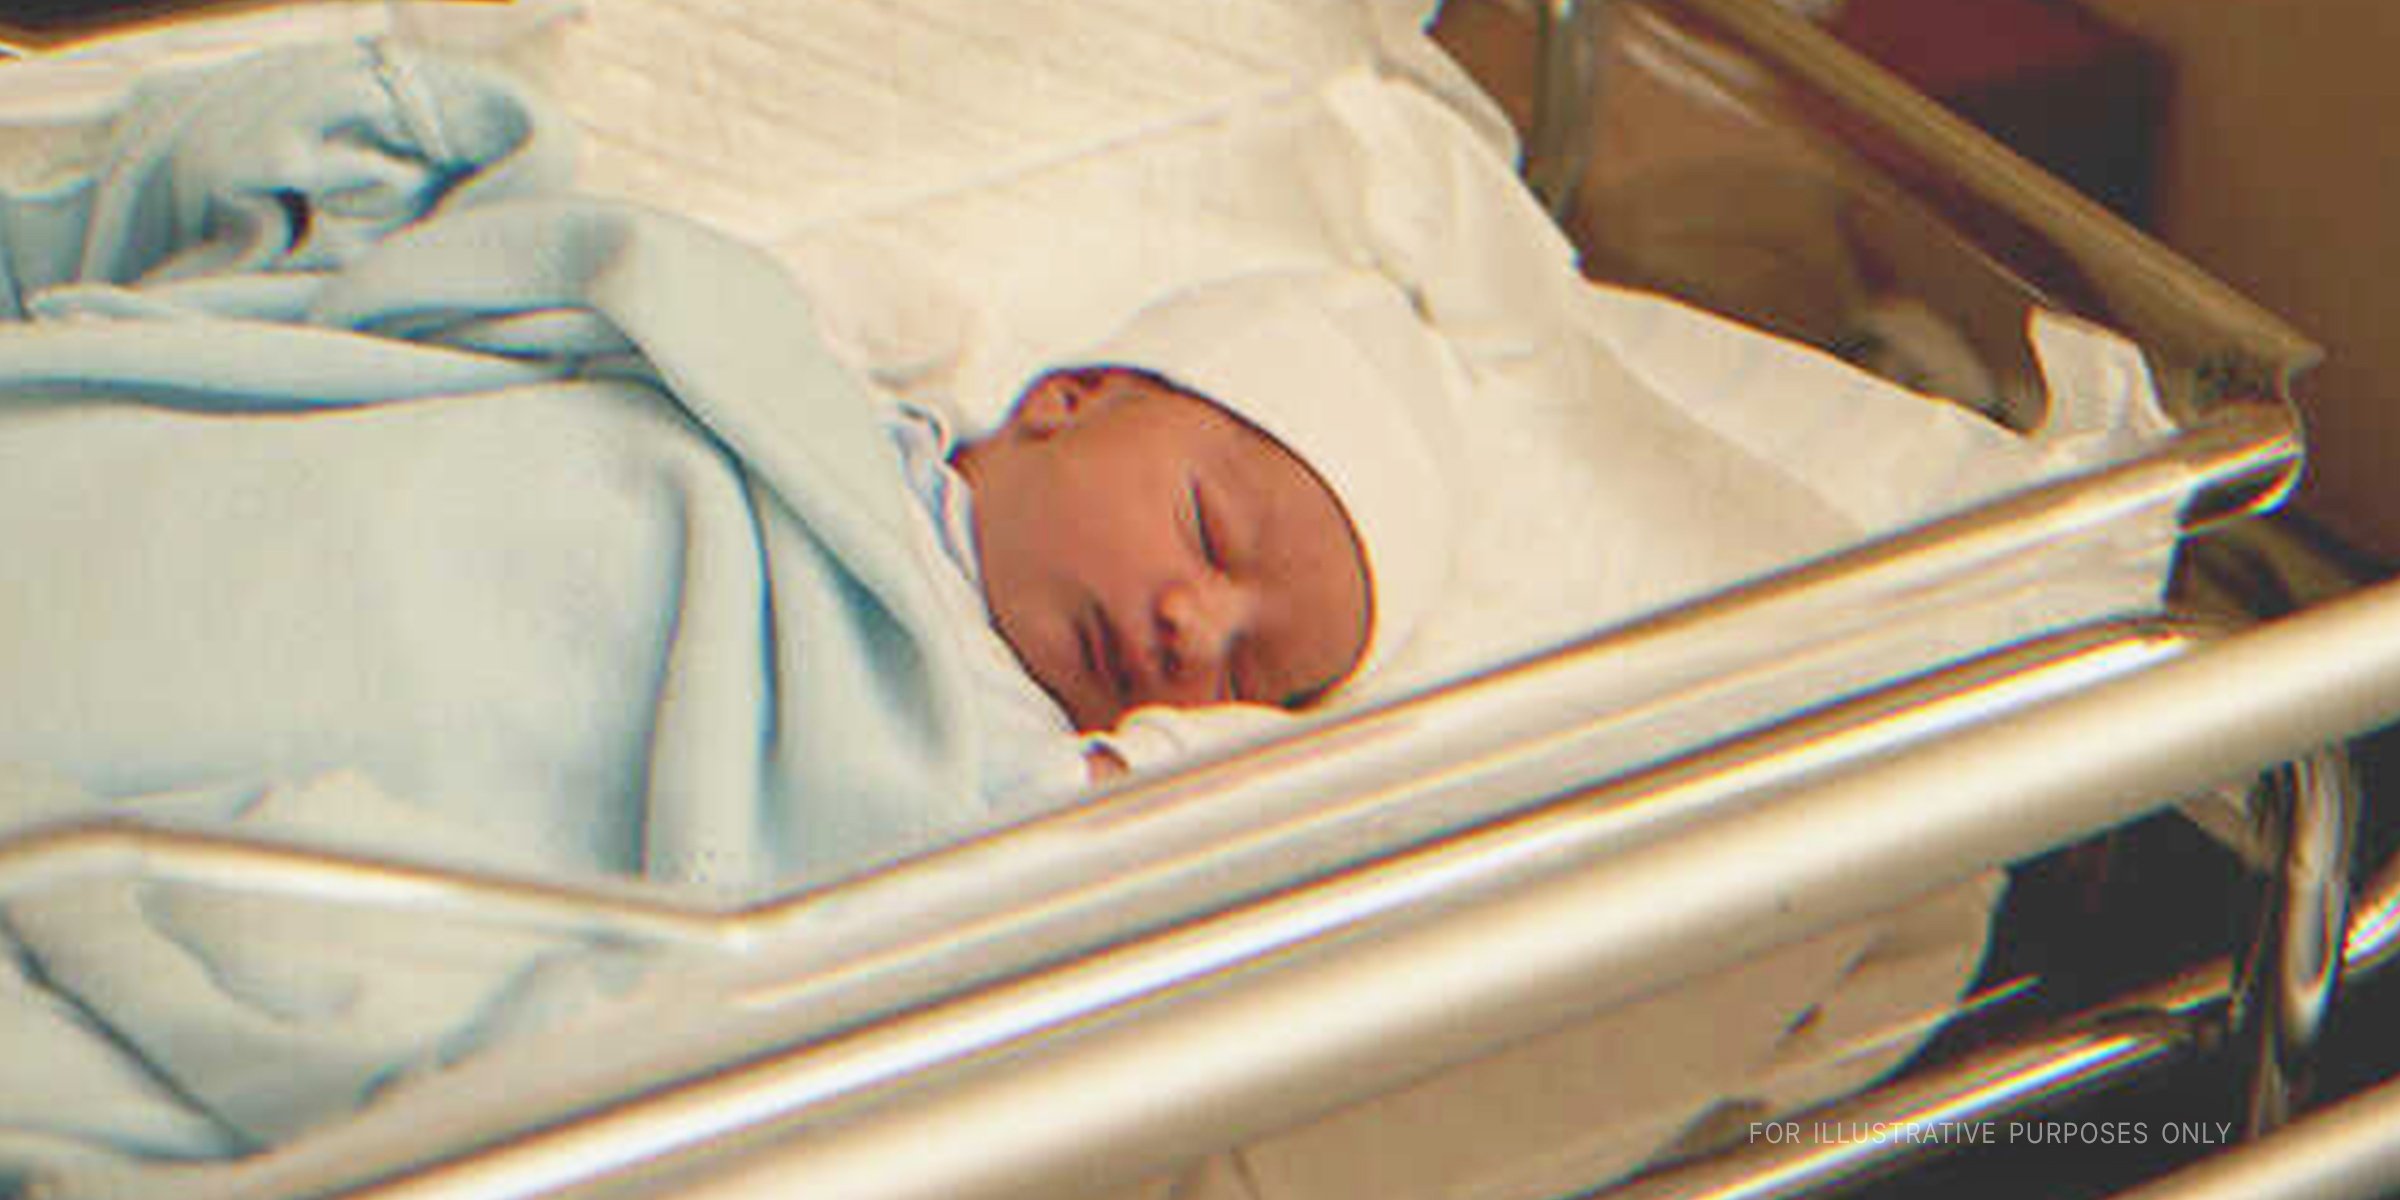 Newborn baby fast asleep in crib | Source: Shutterstock